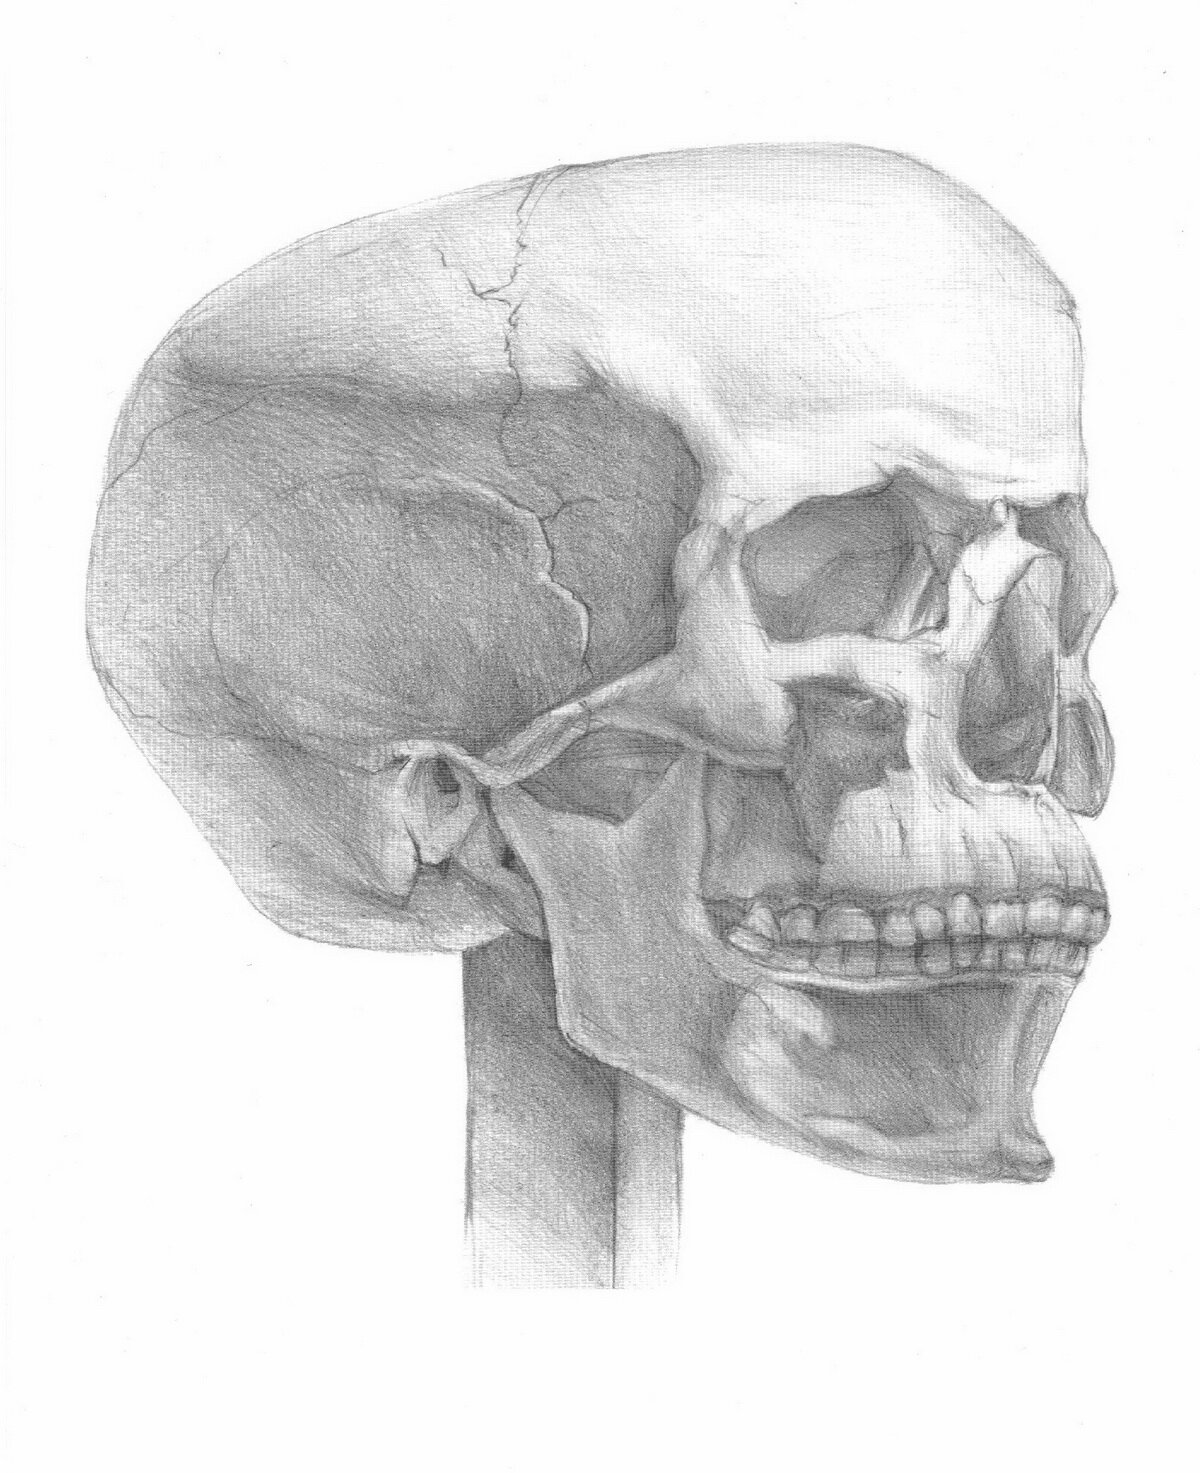 Рисунок черепа человека